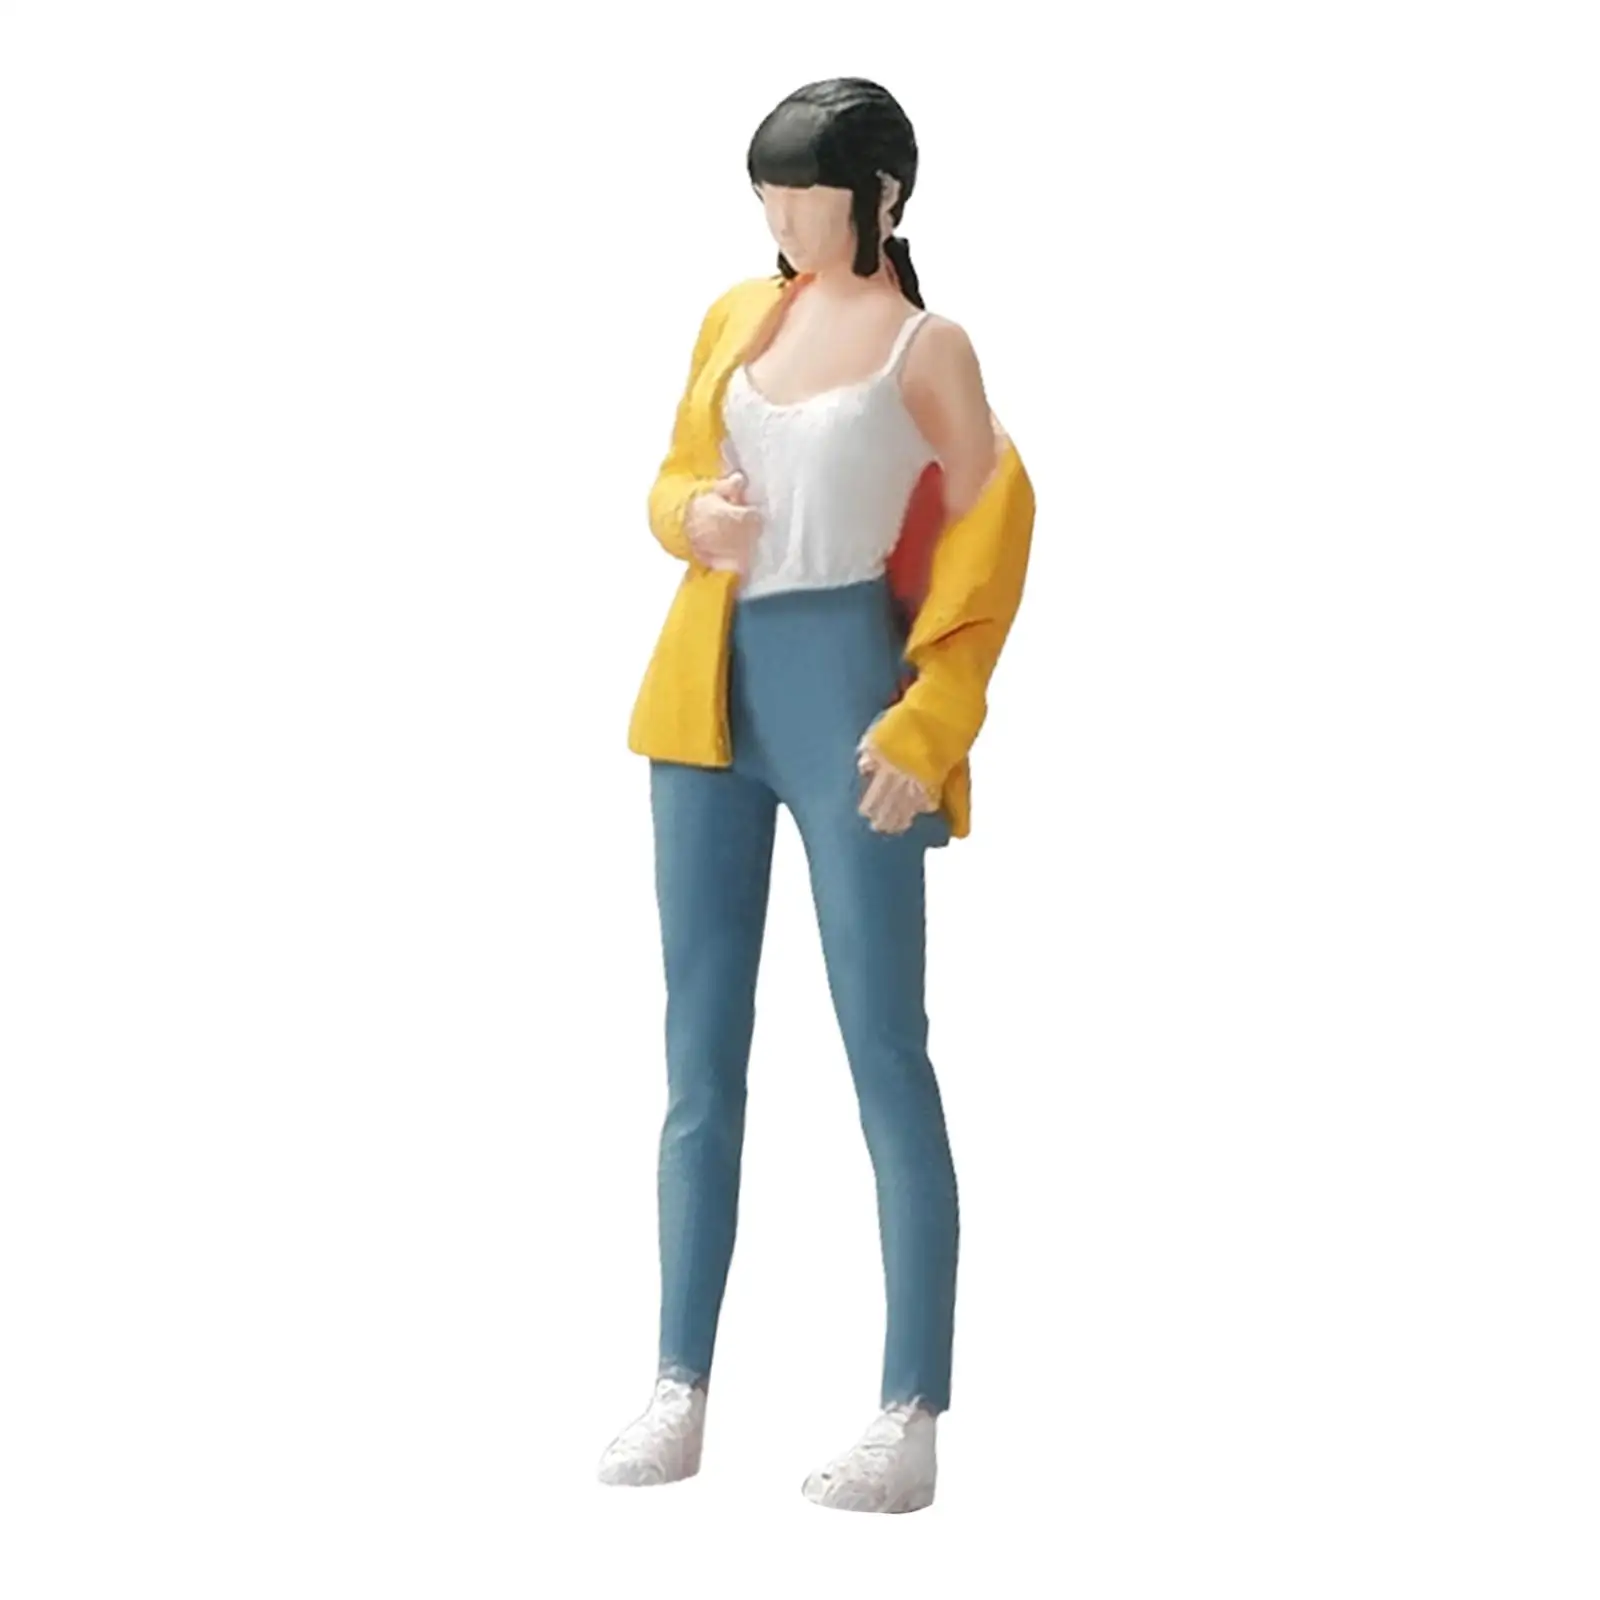 1:64 Girl Model Figure Pose Scene Character Woman Figurine Miniature People Model Handpainted DIY Scene Decor Diorama Layout